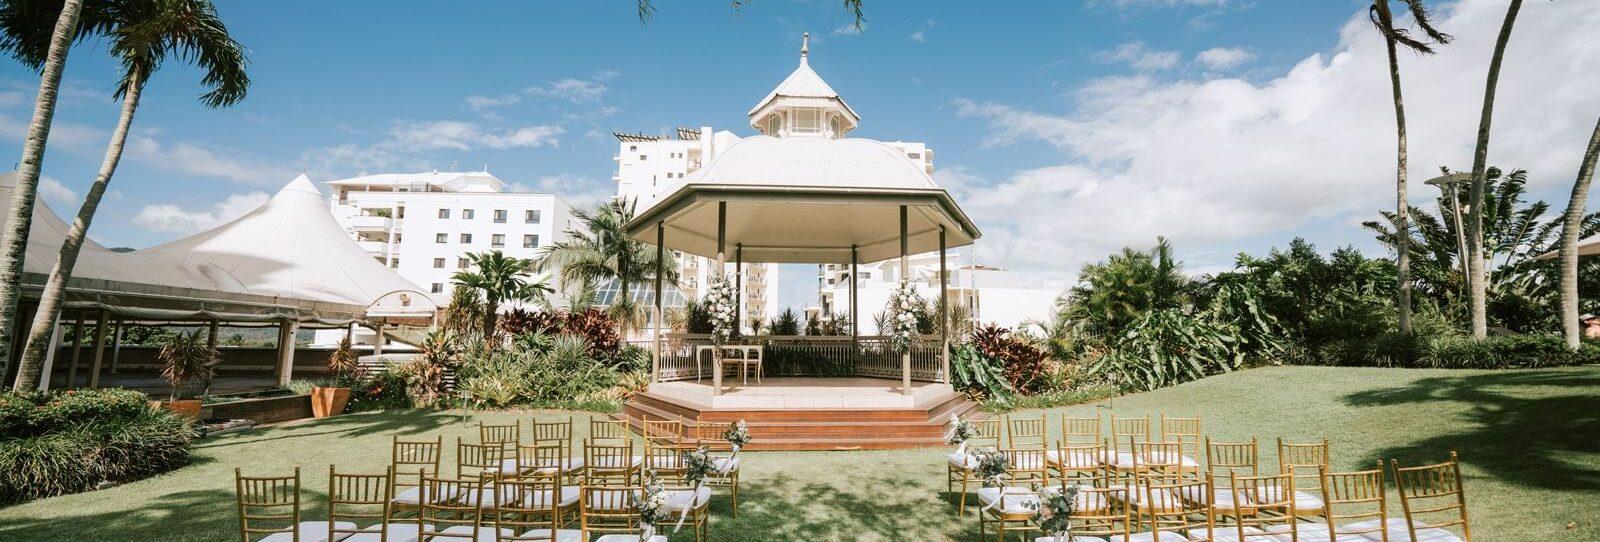 wedding venue cairns pullman hotel